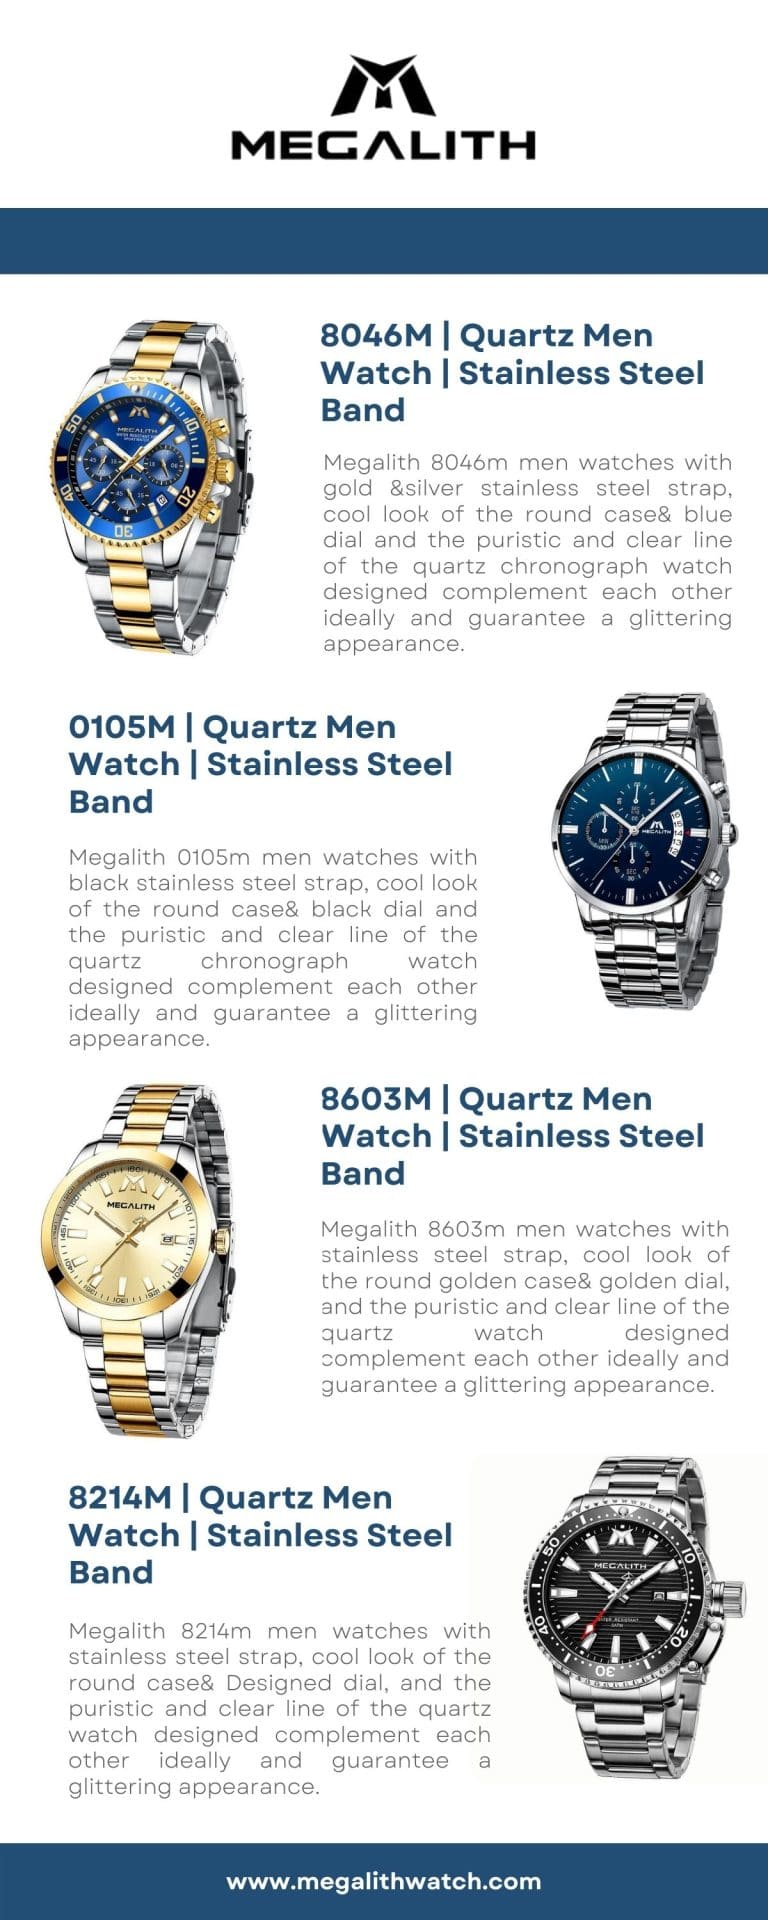 8222M | Quartz Men Watch | Stainless Steel Band